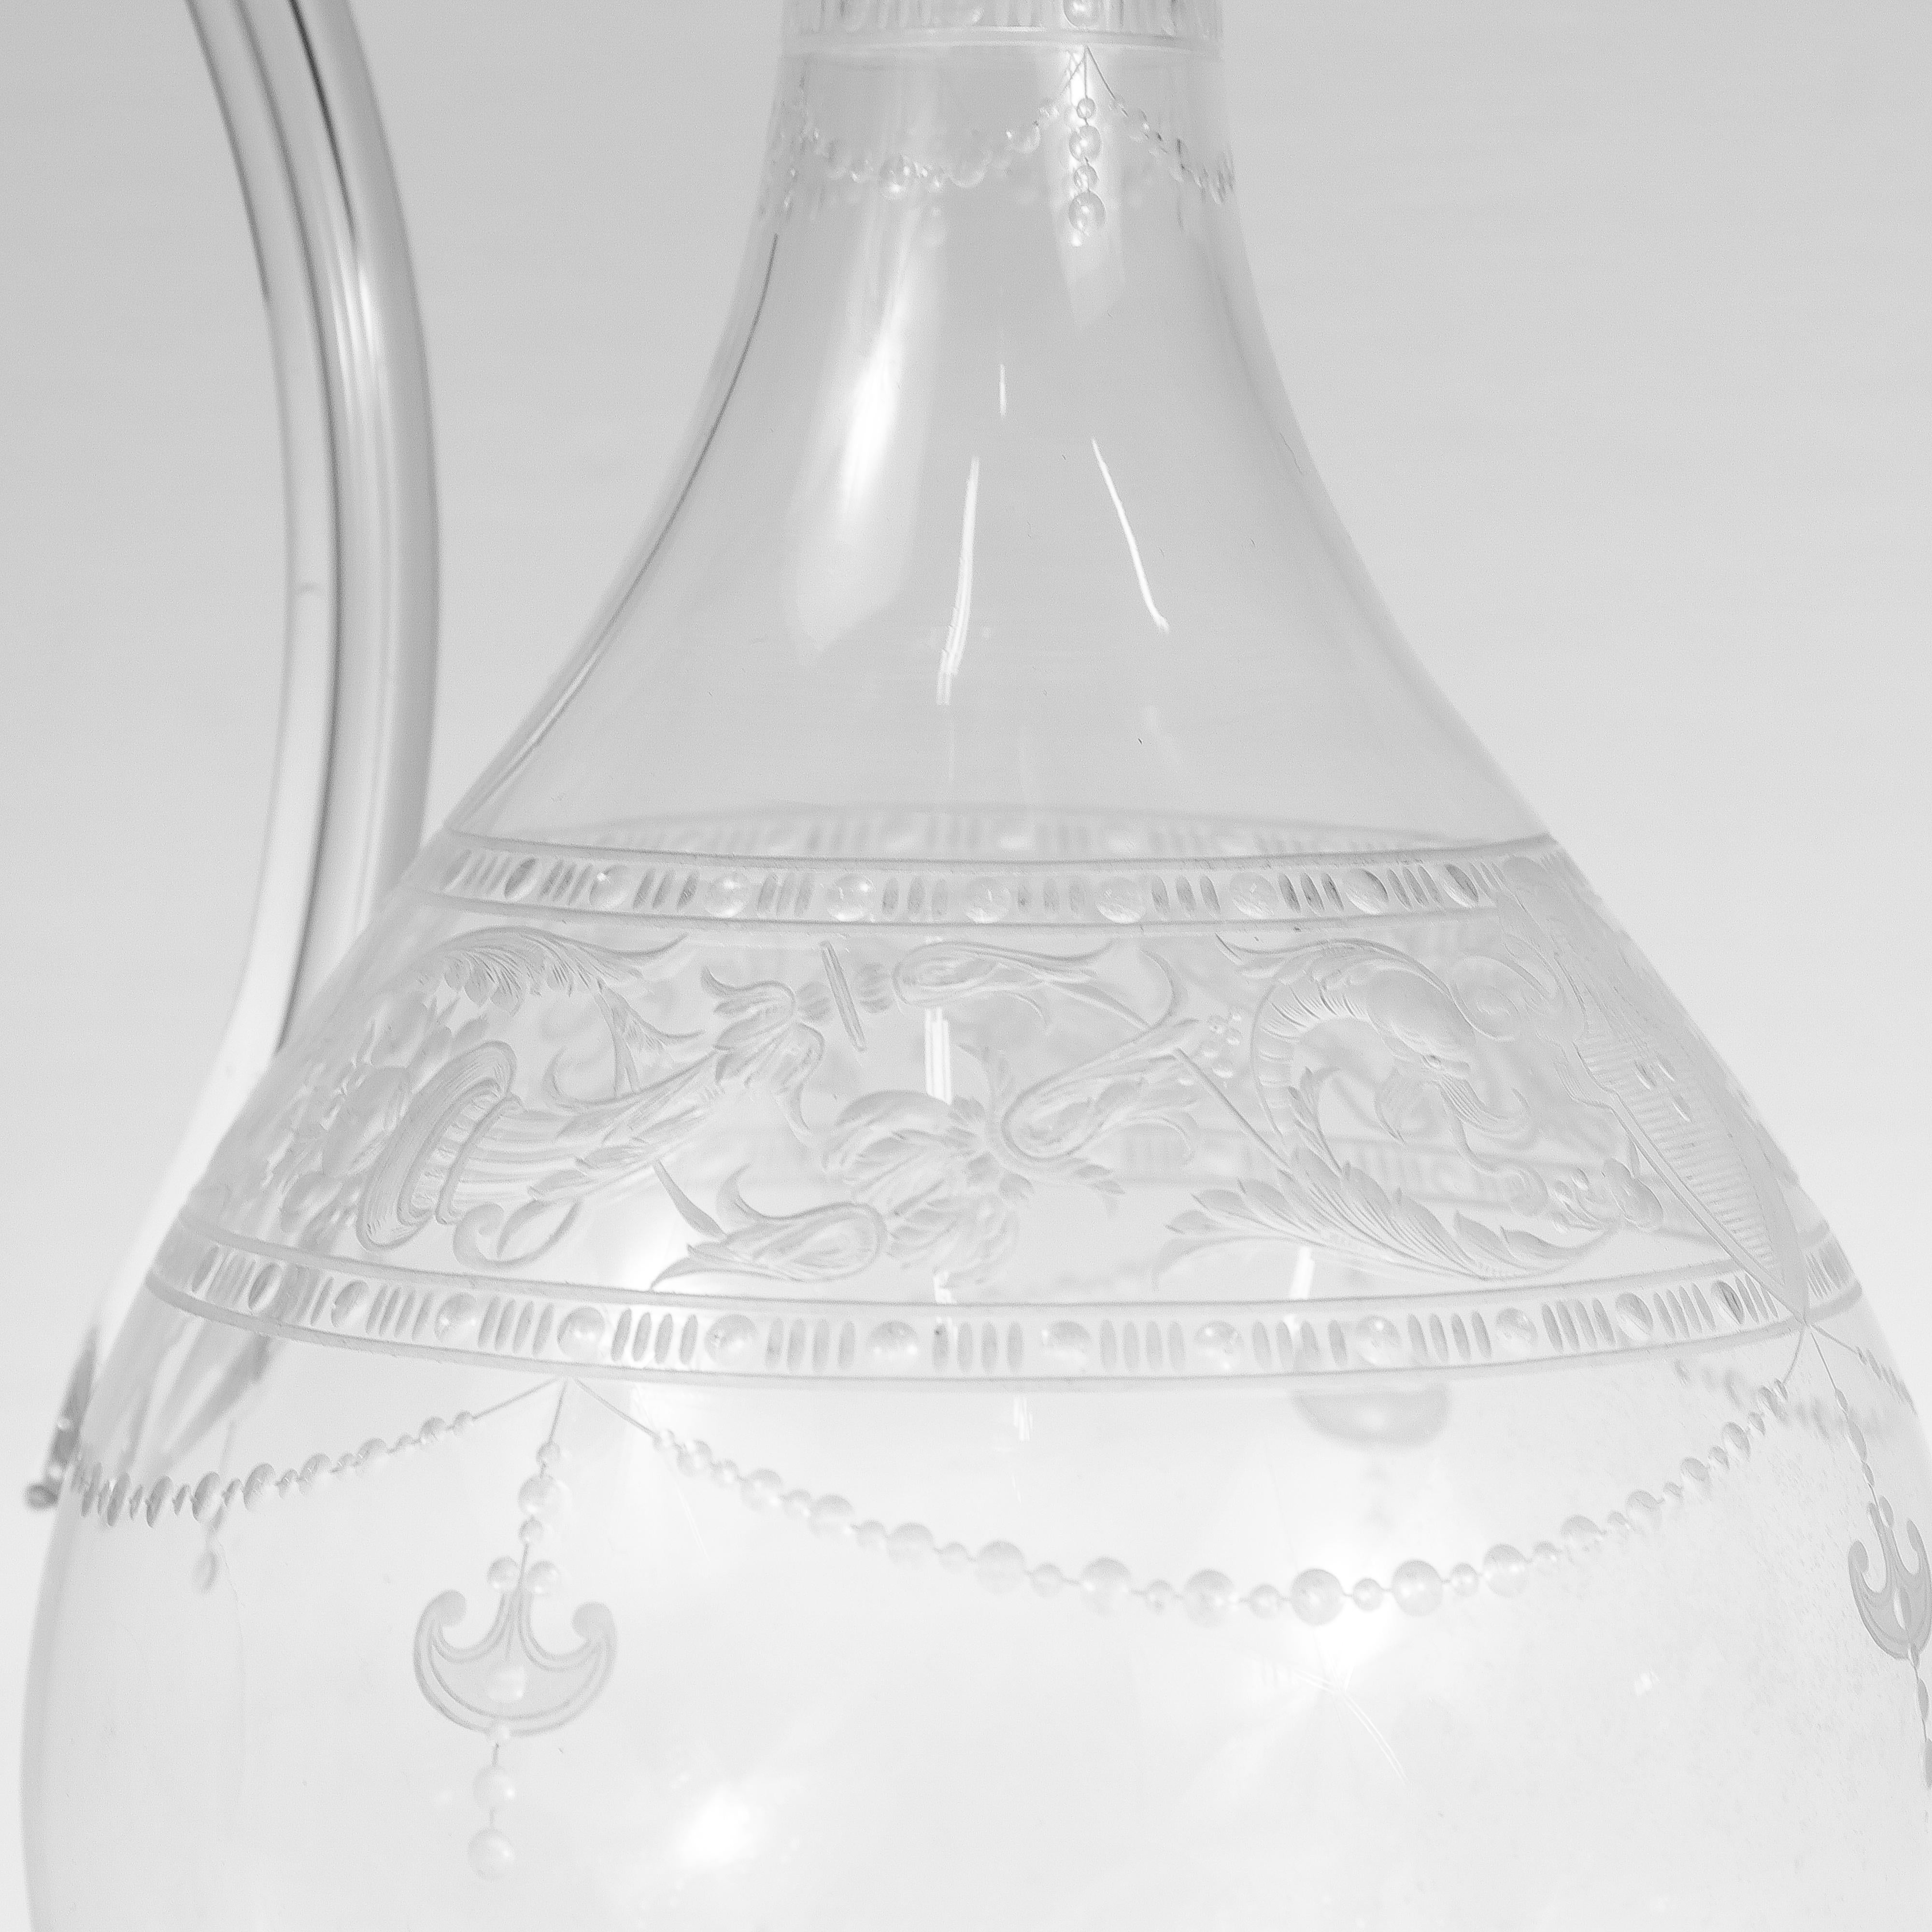 Antique Stourbridge Etched & Engraved Glass Handled Decanter For Sale 7